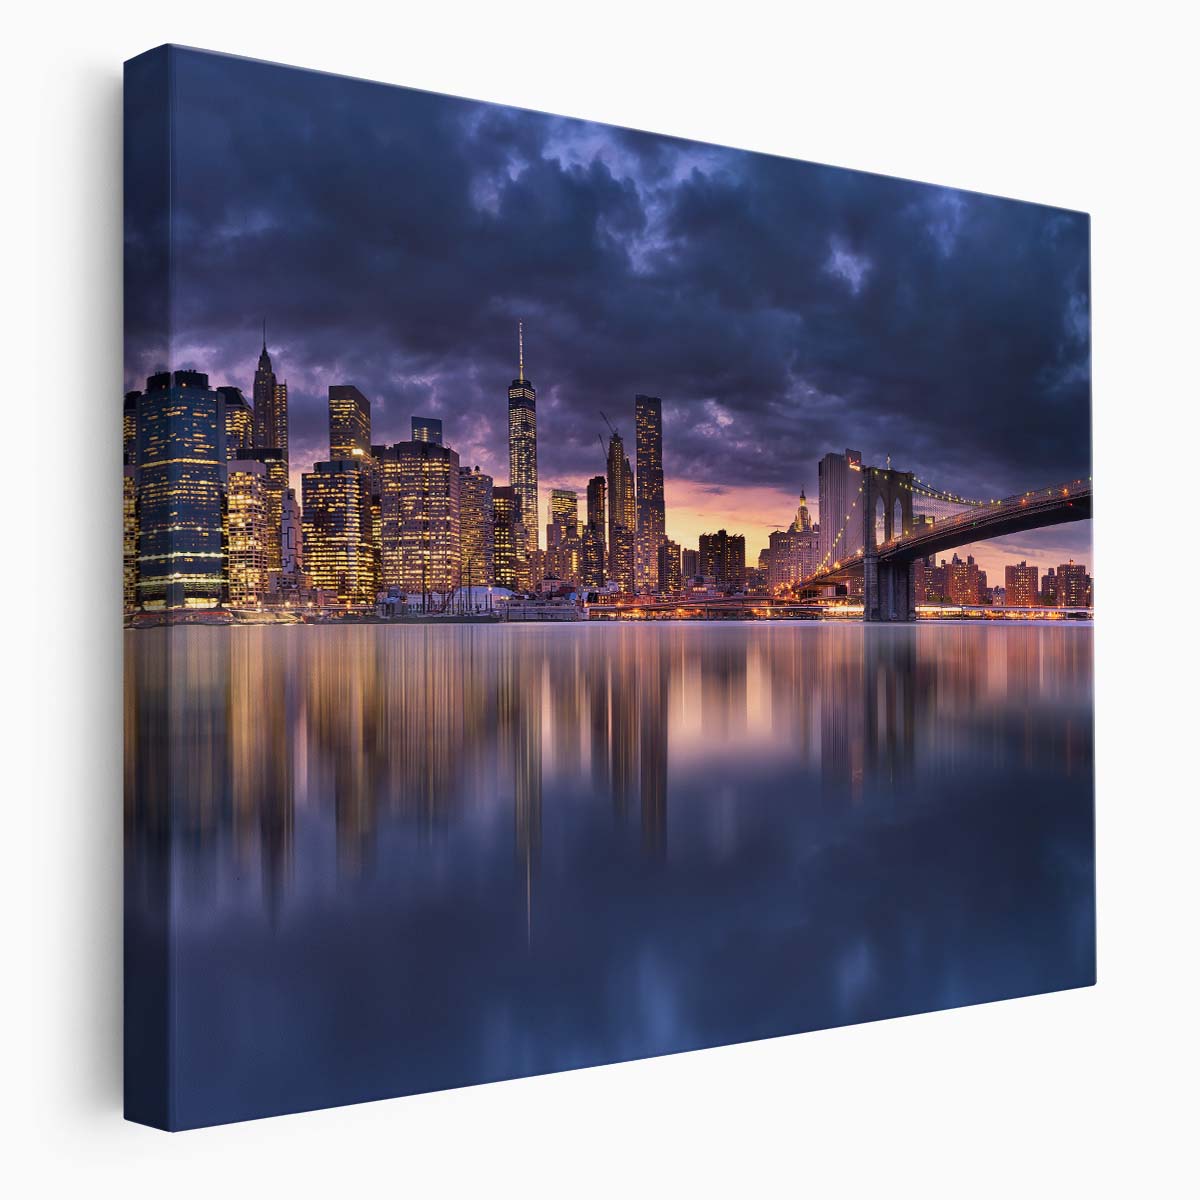 NYC Brooklyn Bridge & Manhattan Skyline Panorama Wall Art by Luxuriance Designs. Made in USA.